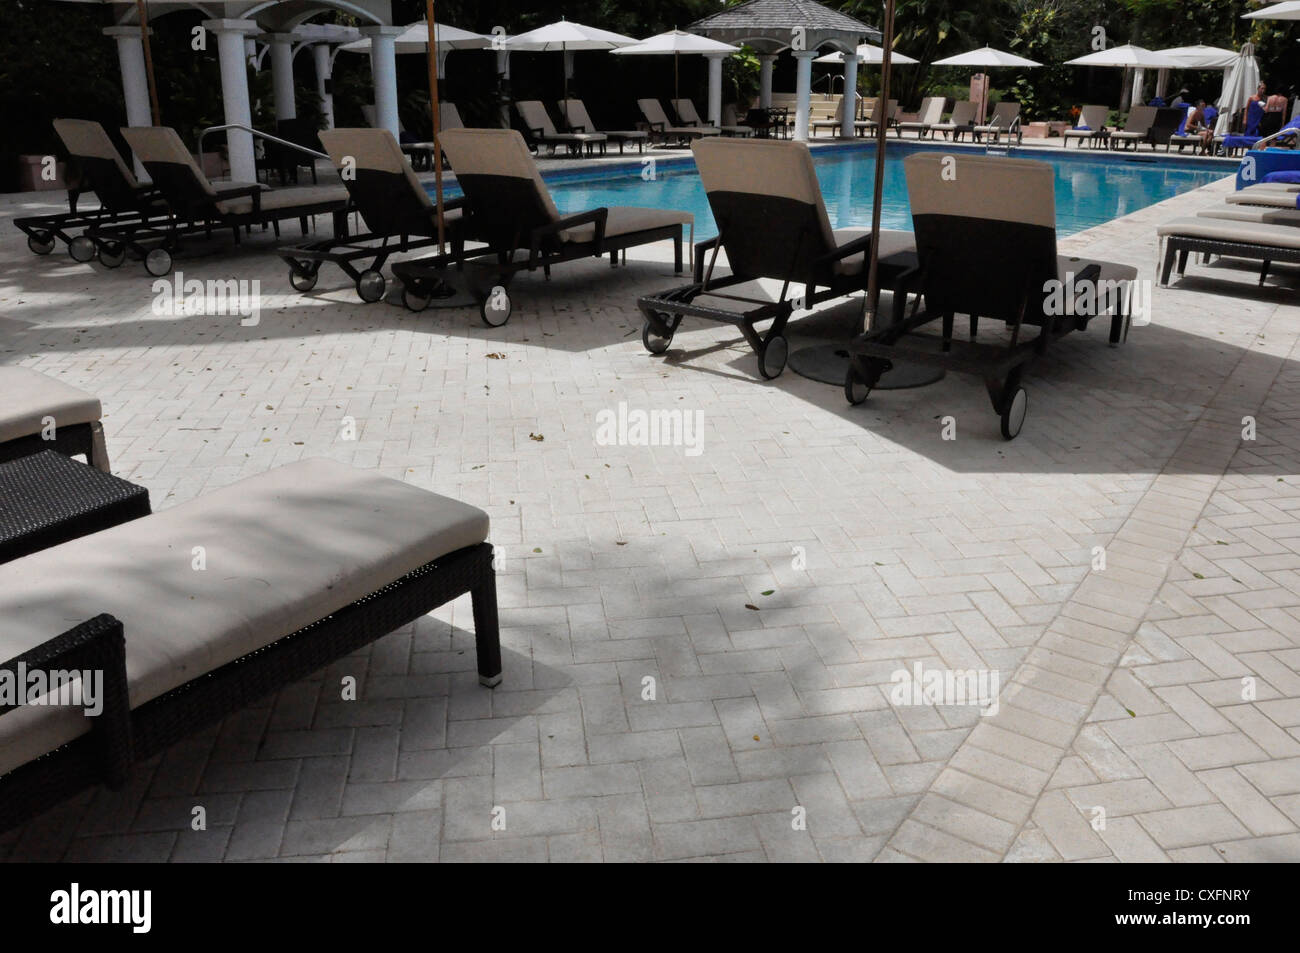 Royal Pavilion Barbados piscine locations blissful Banque D'Images